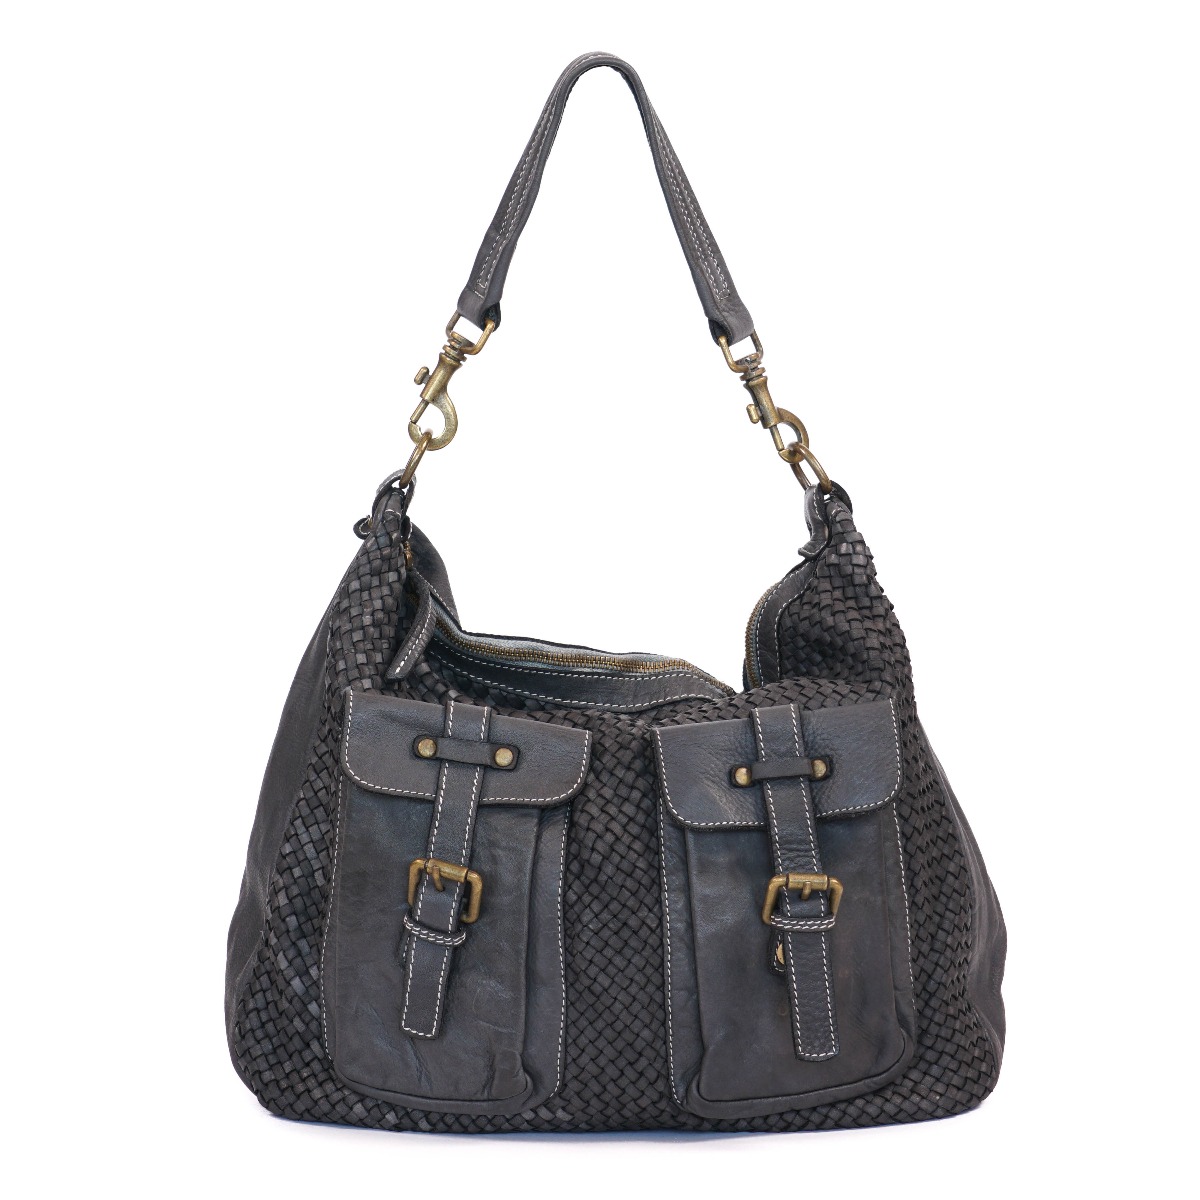 Woven leather hobo bag - dark gray